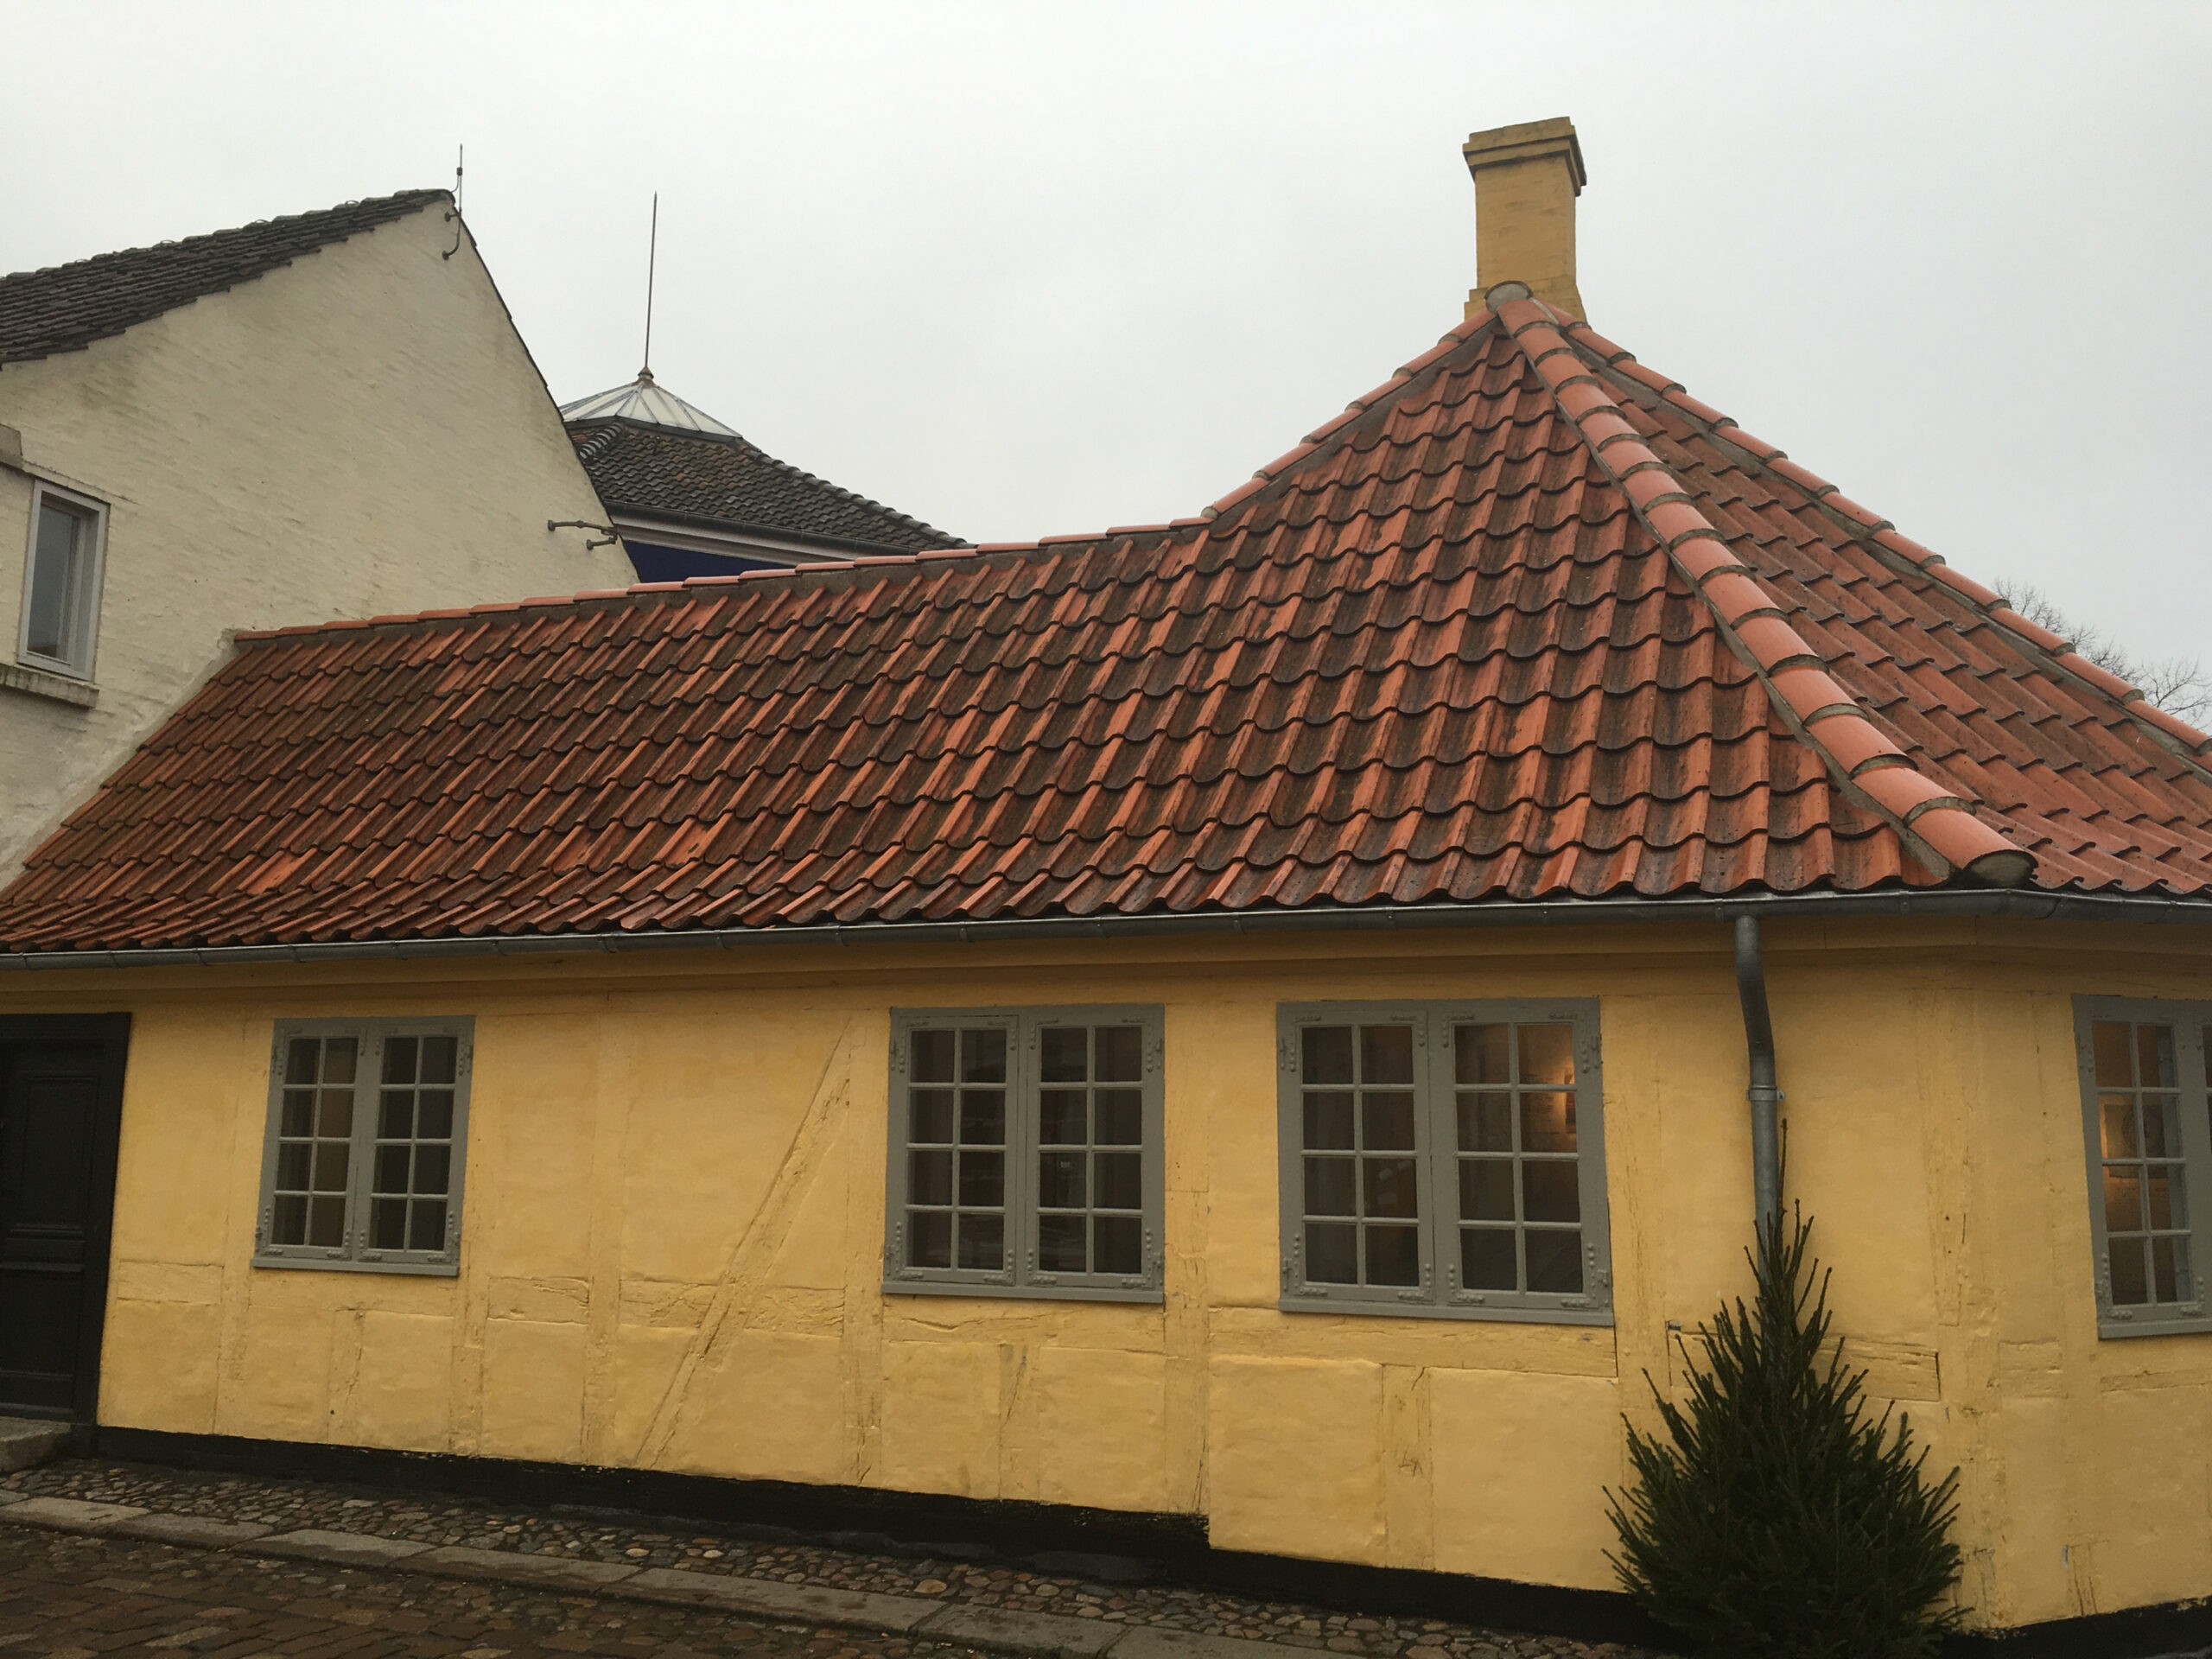 Hans Christian Anderson's house sits on R&aring;dhuspladsen Street in Odense, Denmark.